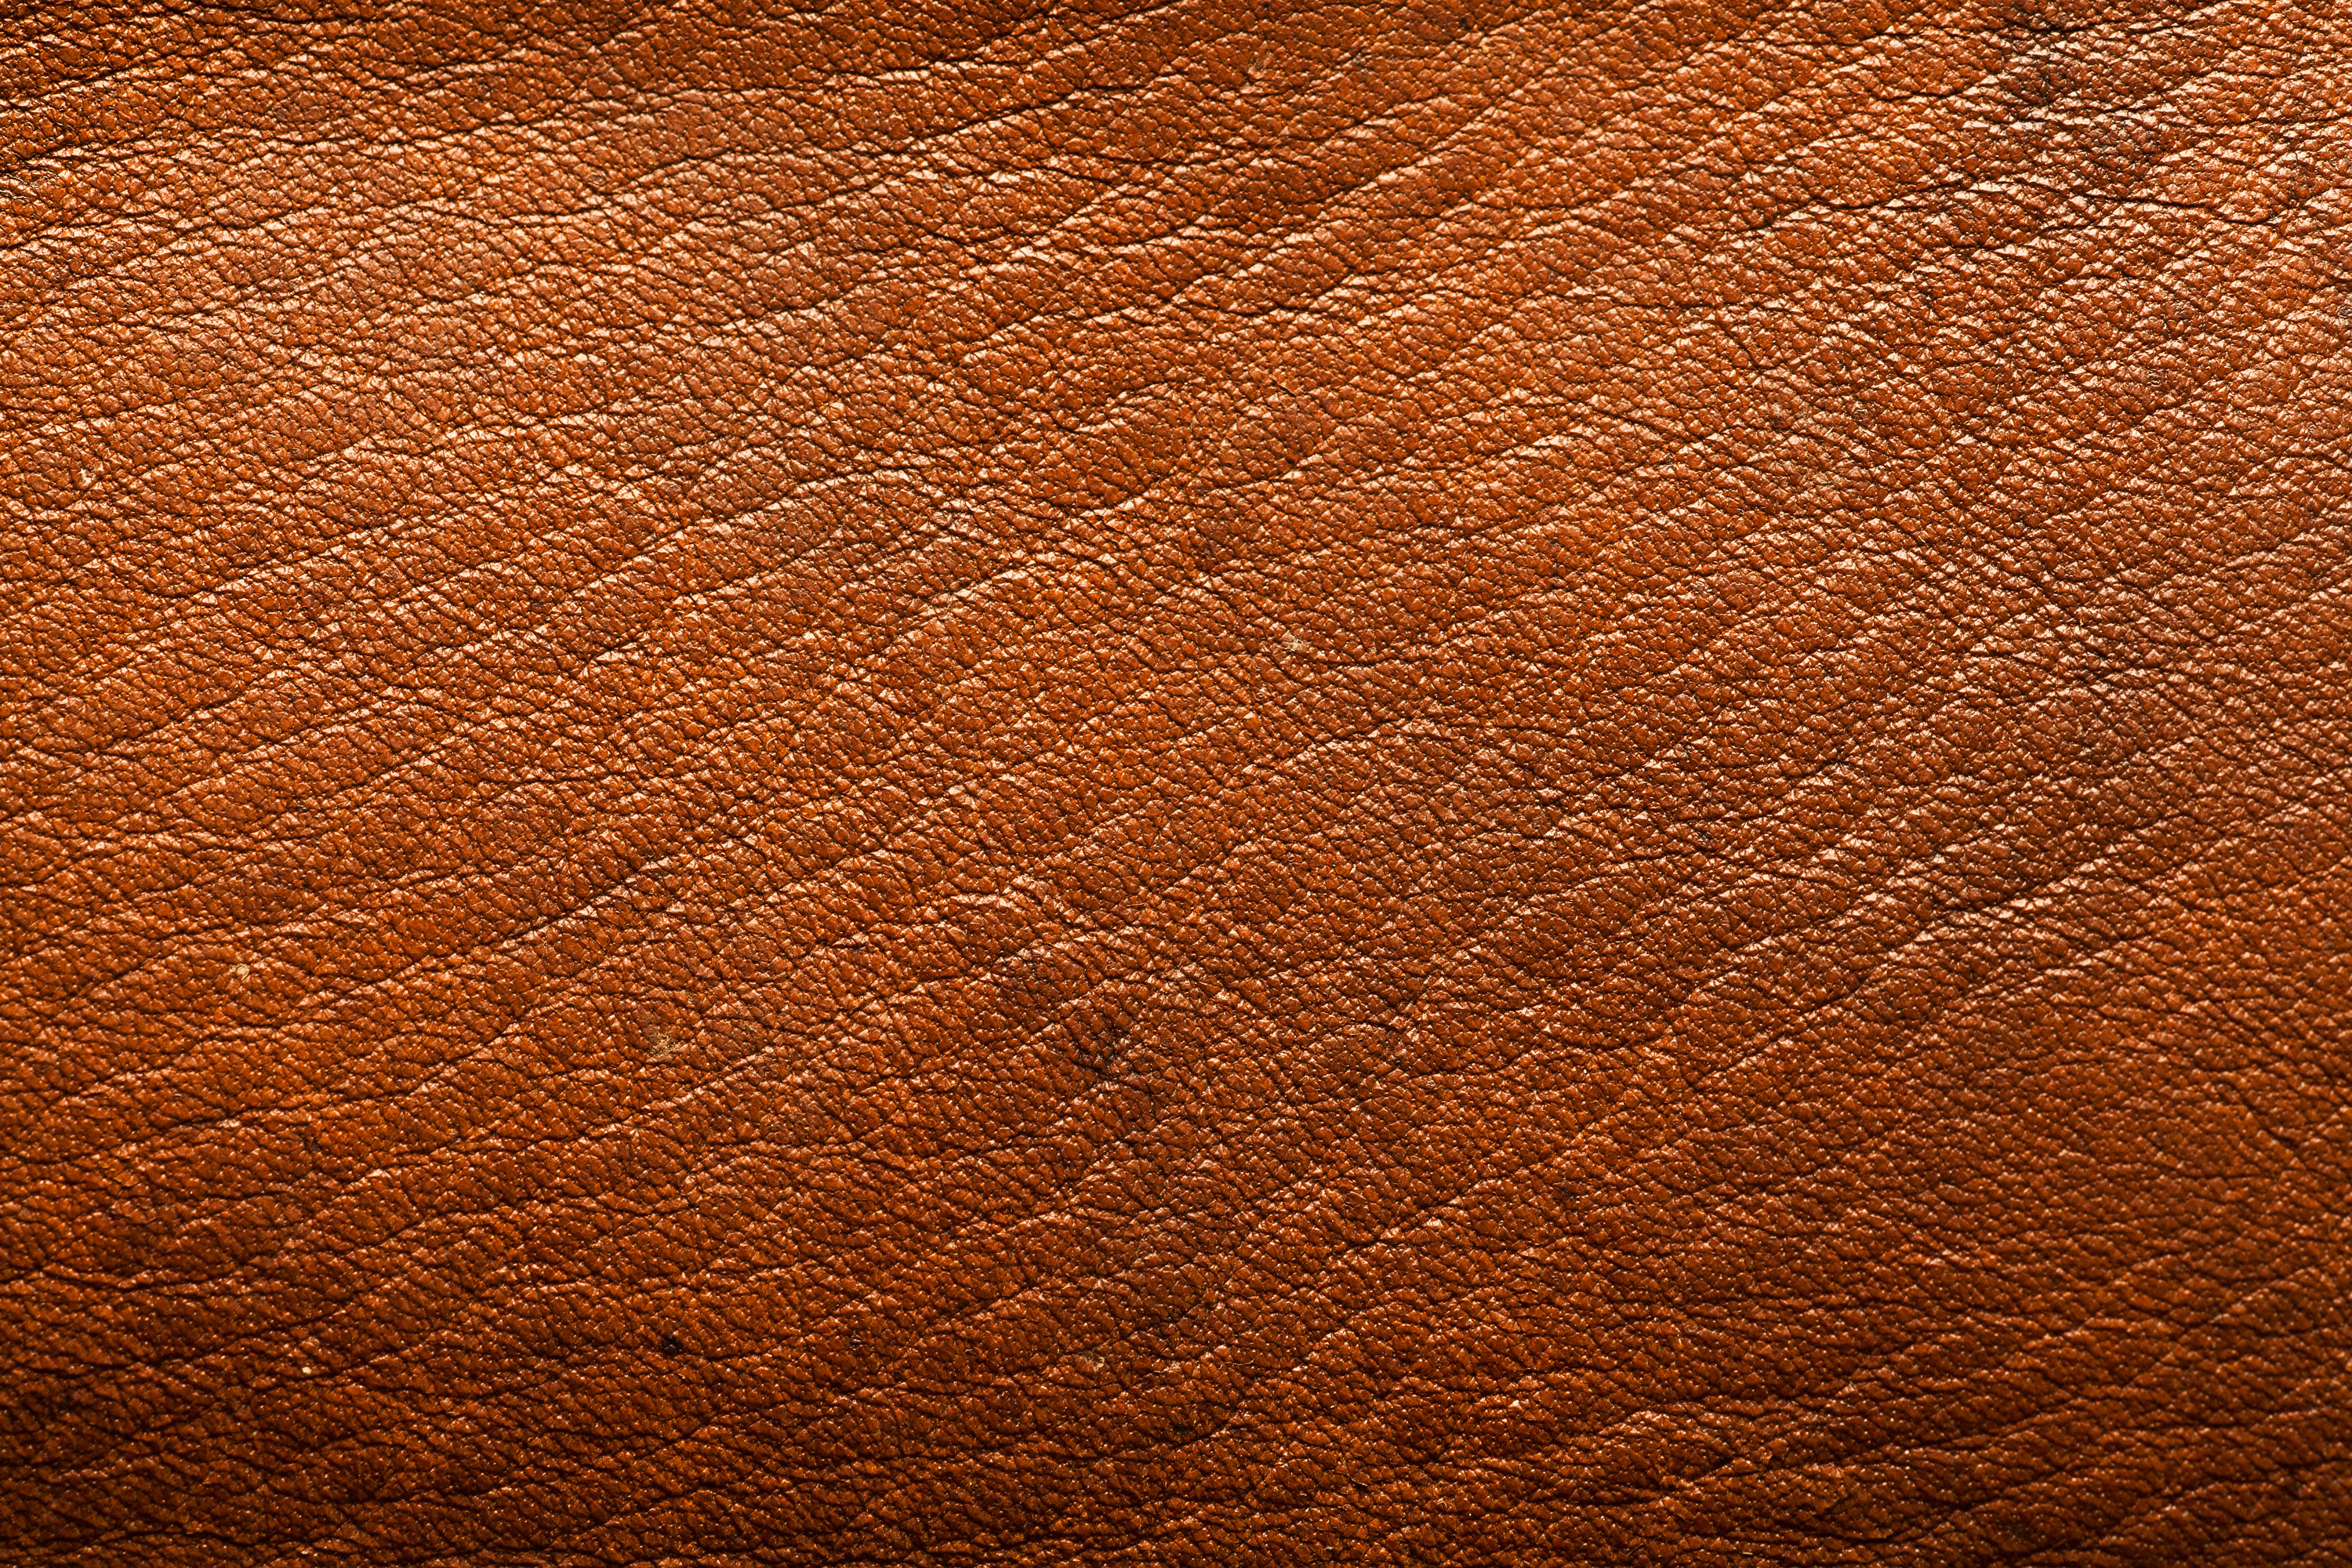 wildtextures-brown-leather-texture.jpg